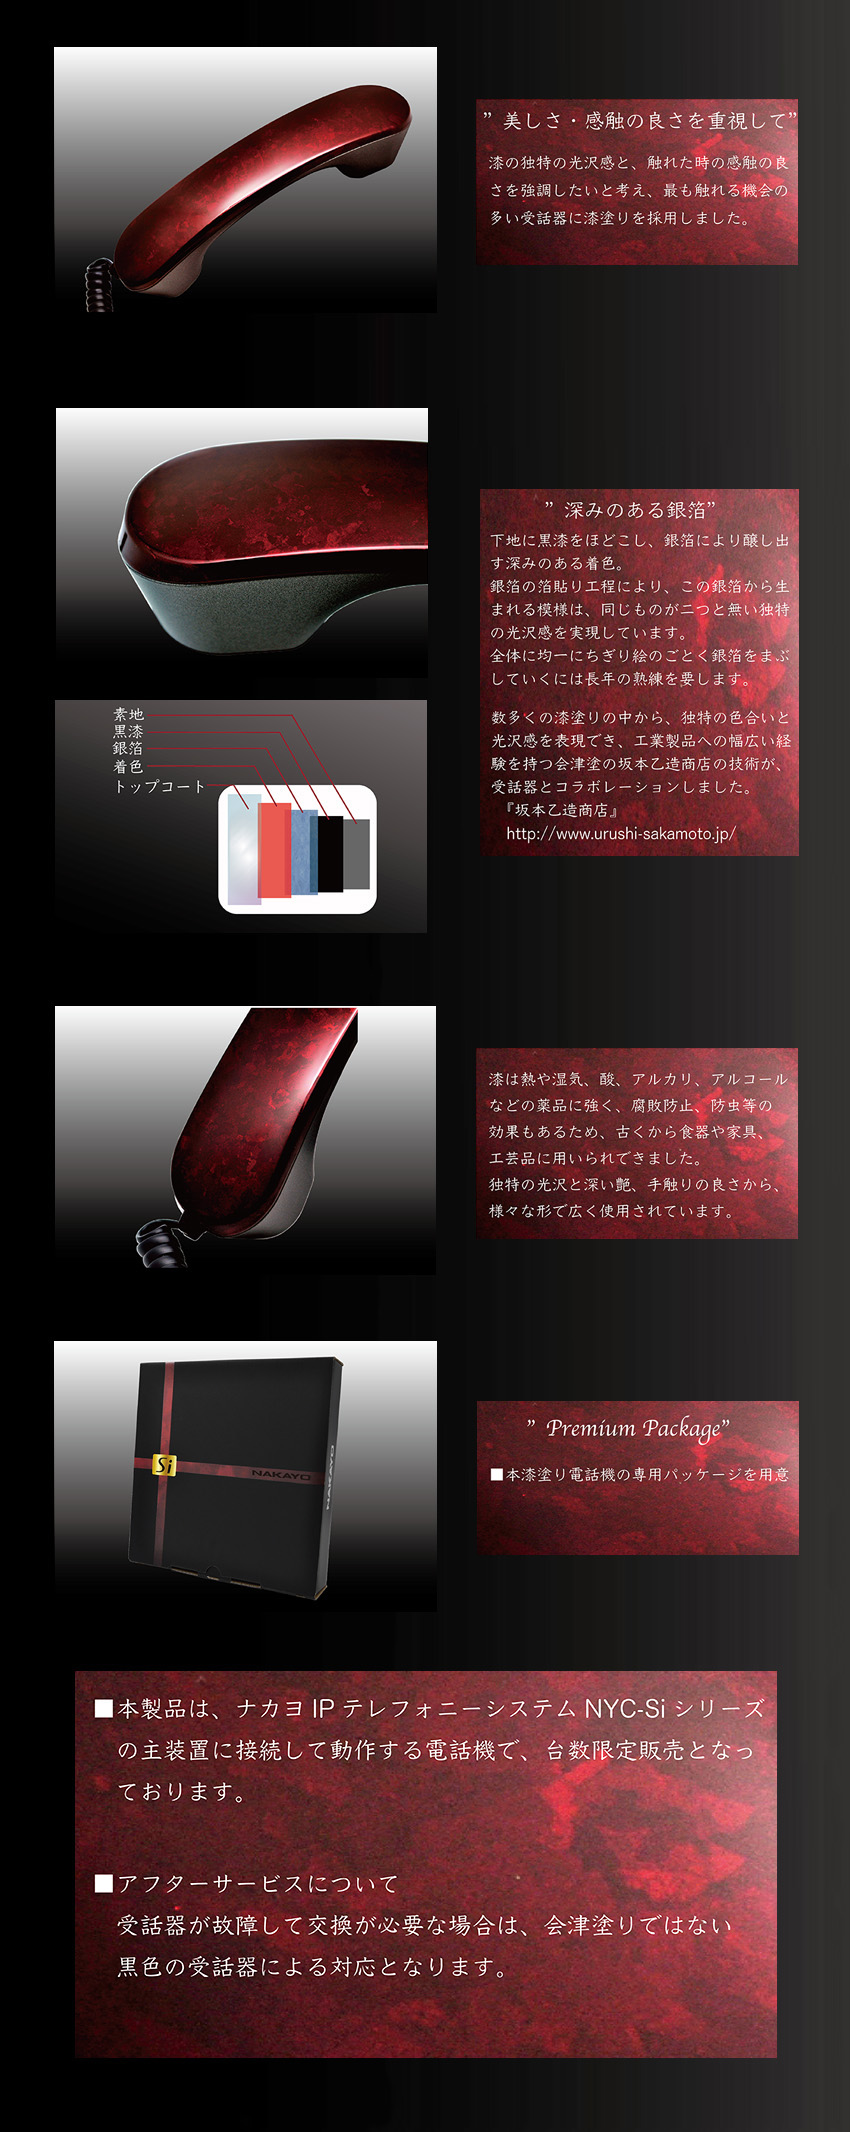 NAKAYO-NYC-Si-URUSHI-02.jpg 美しさ・感触の良さを重視して　漆の独特の光沢感と、触れたときの感触の良さを強調したいと考え、最も触れる機会の多い受話器に漆塗りを採用しました。Premium Package 漆塗り電話機の専用パッケージを用意。